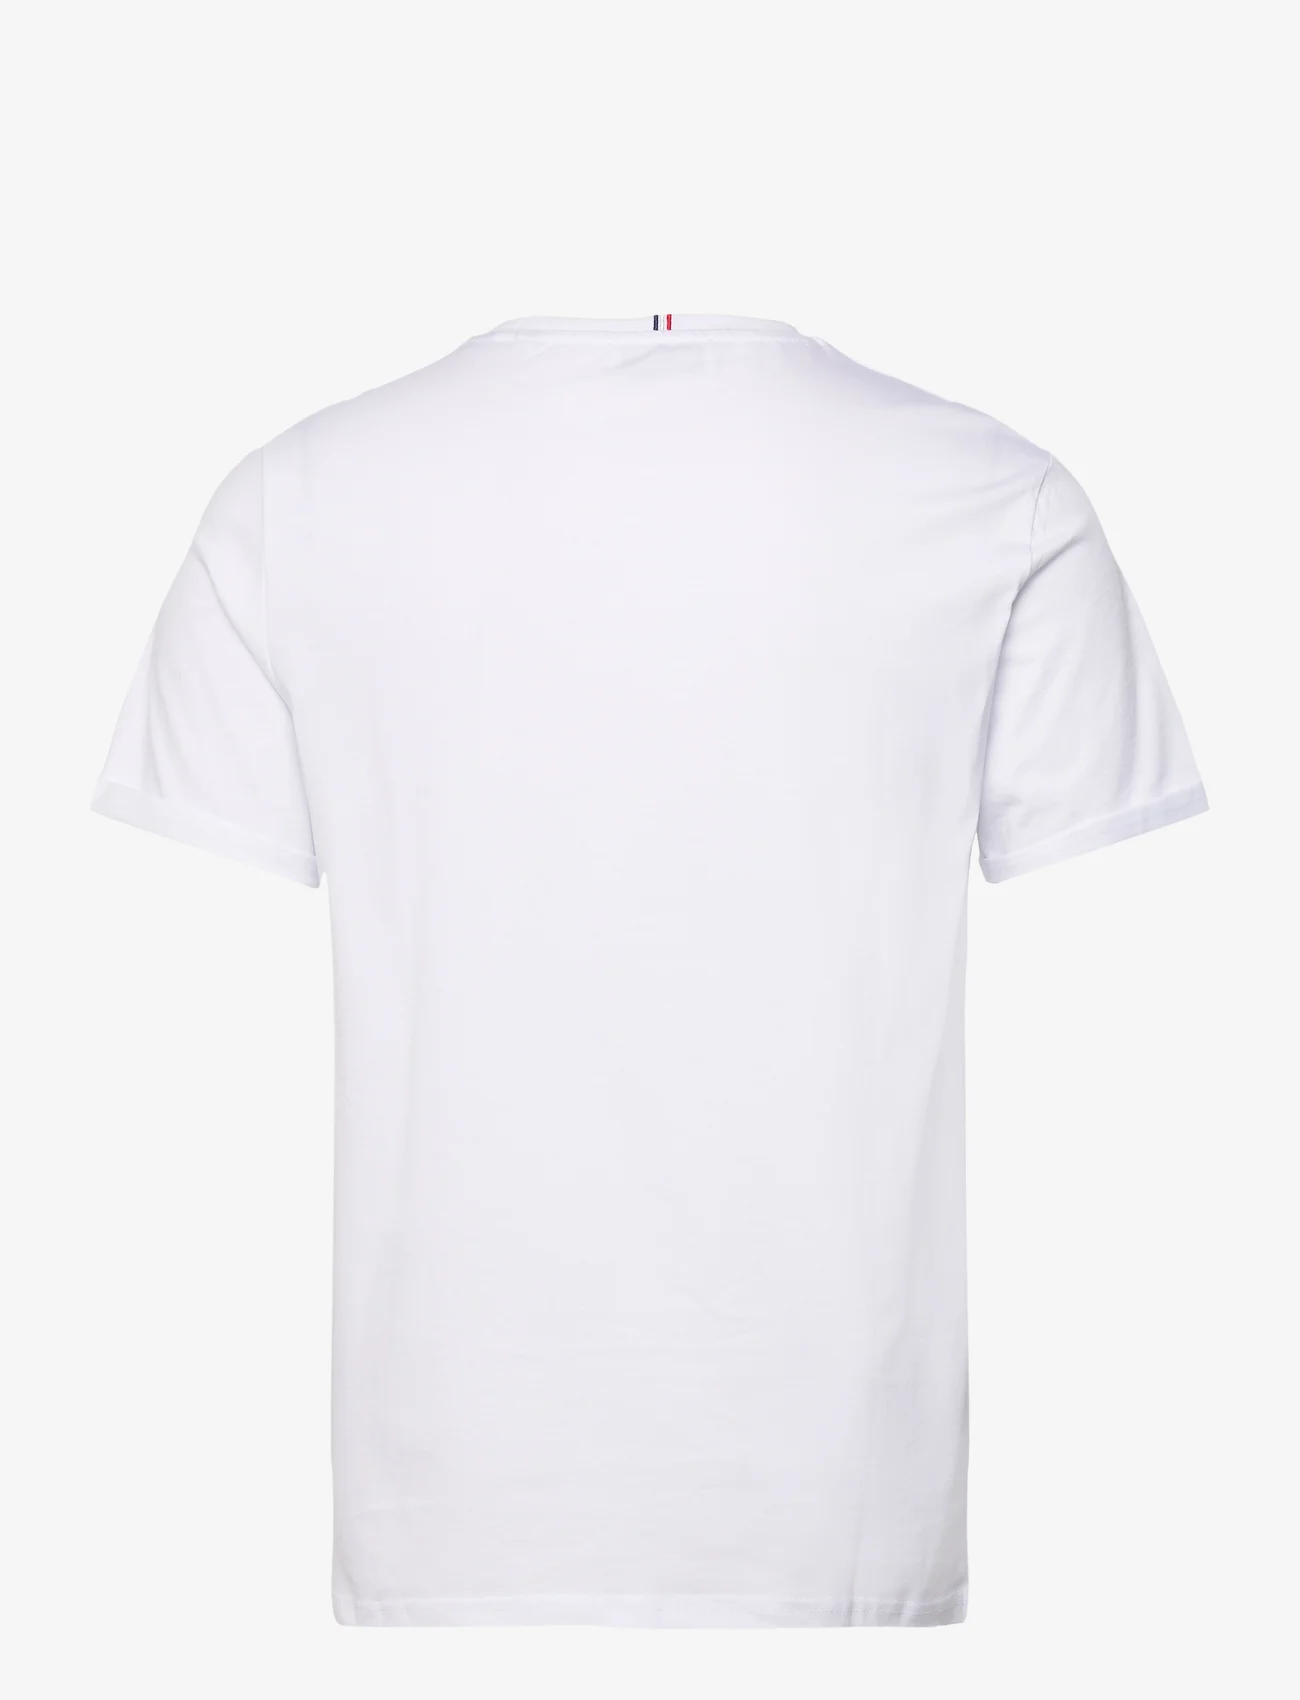 Les Deux - Les Deux II T-Shirt 2.0 - marškinėliai trumpomis rankovėmis - white/dark copper - 1